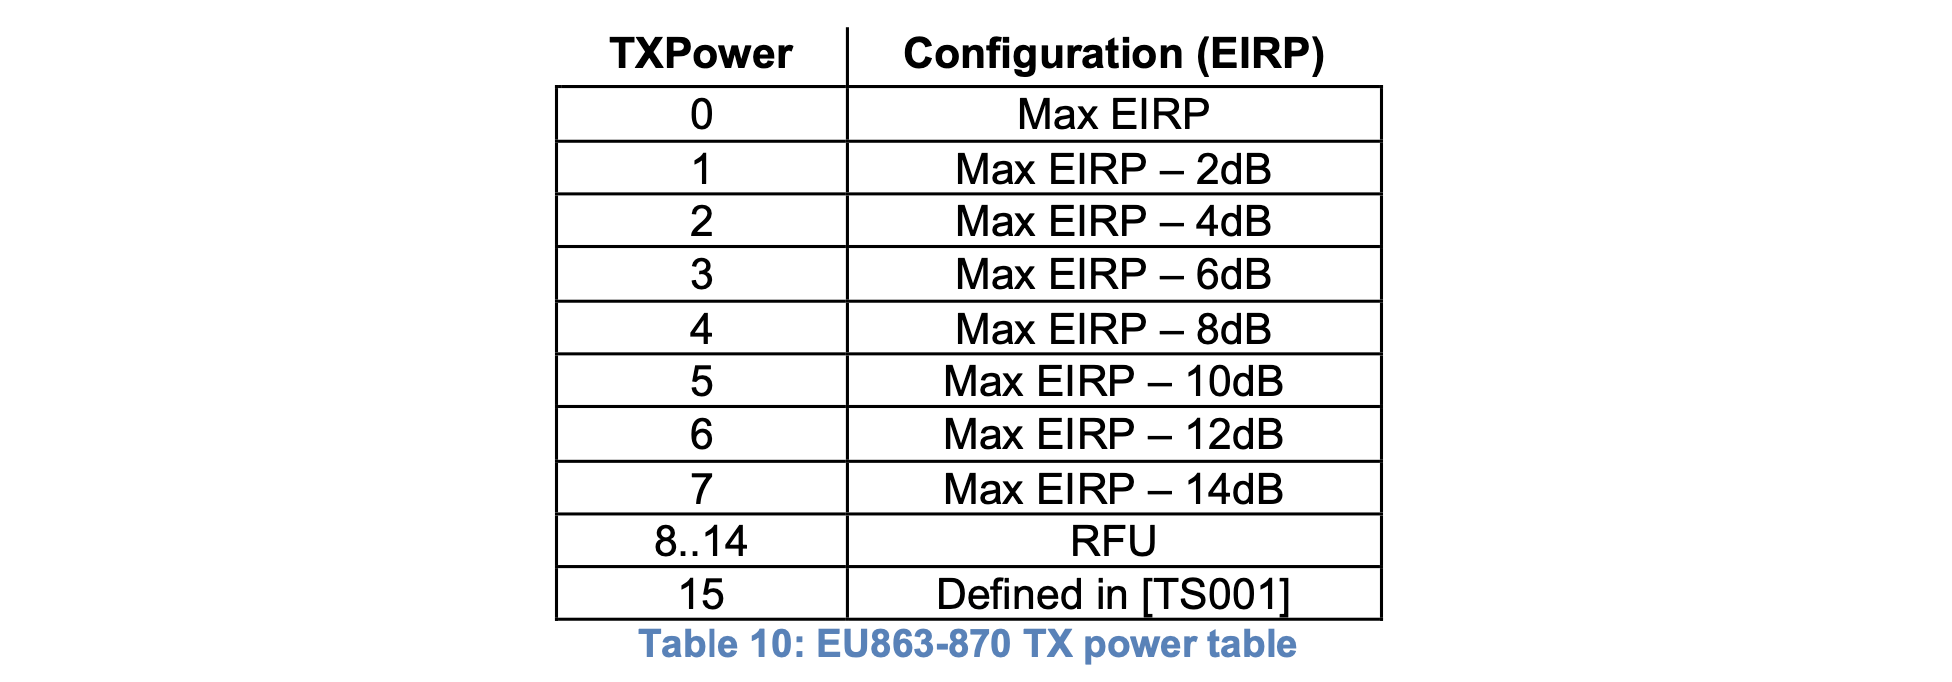 TXPower代码与EU863配置的对应关系。来源RP002-1.0.3 LoRaWAN区域参数